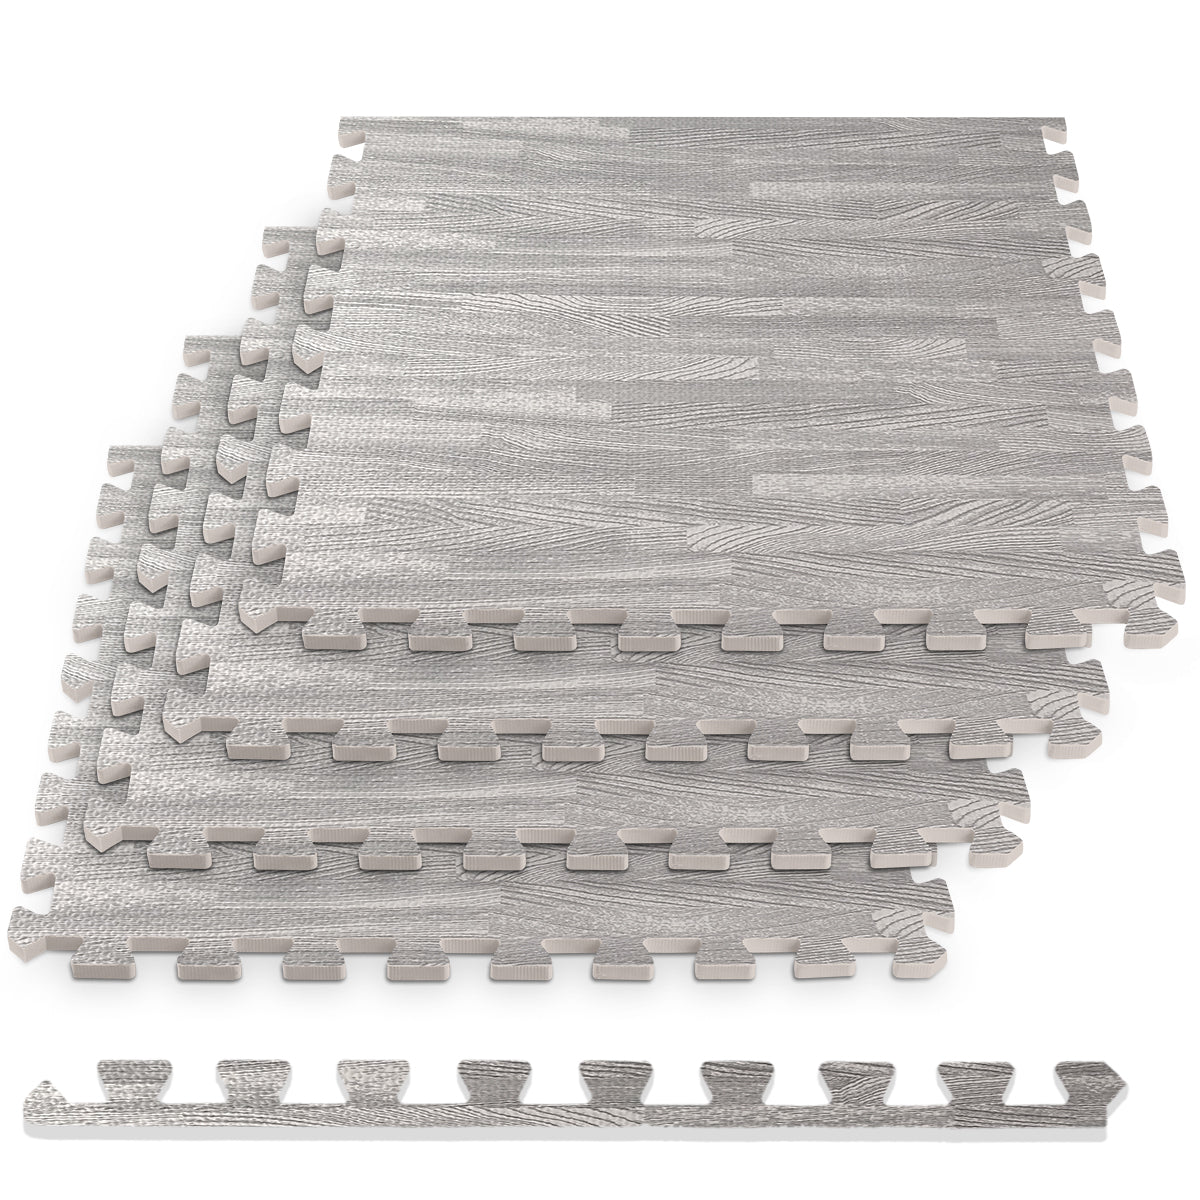 3 8 Inch Thick Interlocking Wood Grain Foam Floor Tiles For Home Offi Homecubeusa